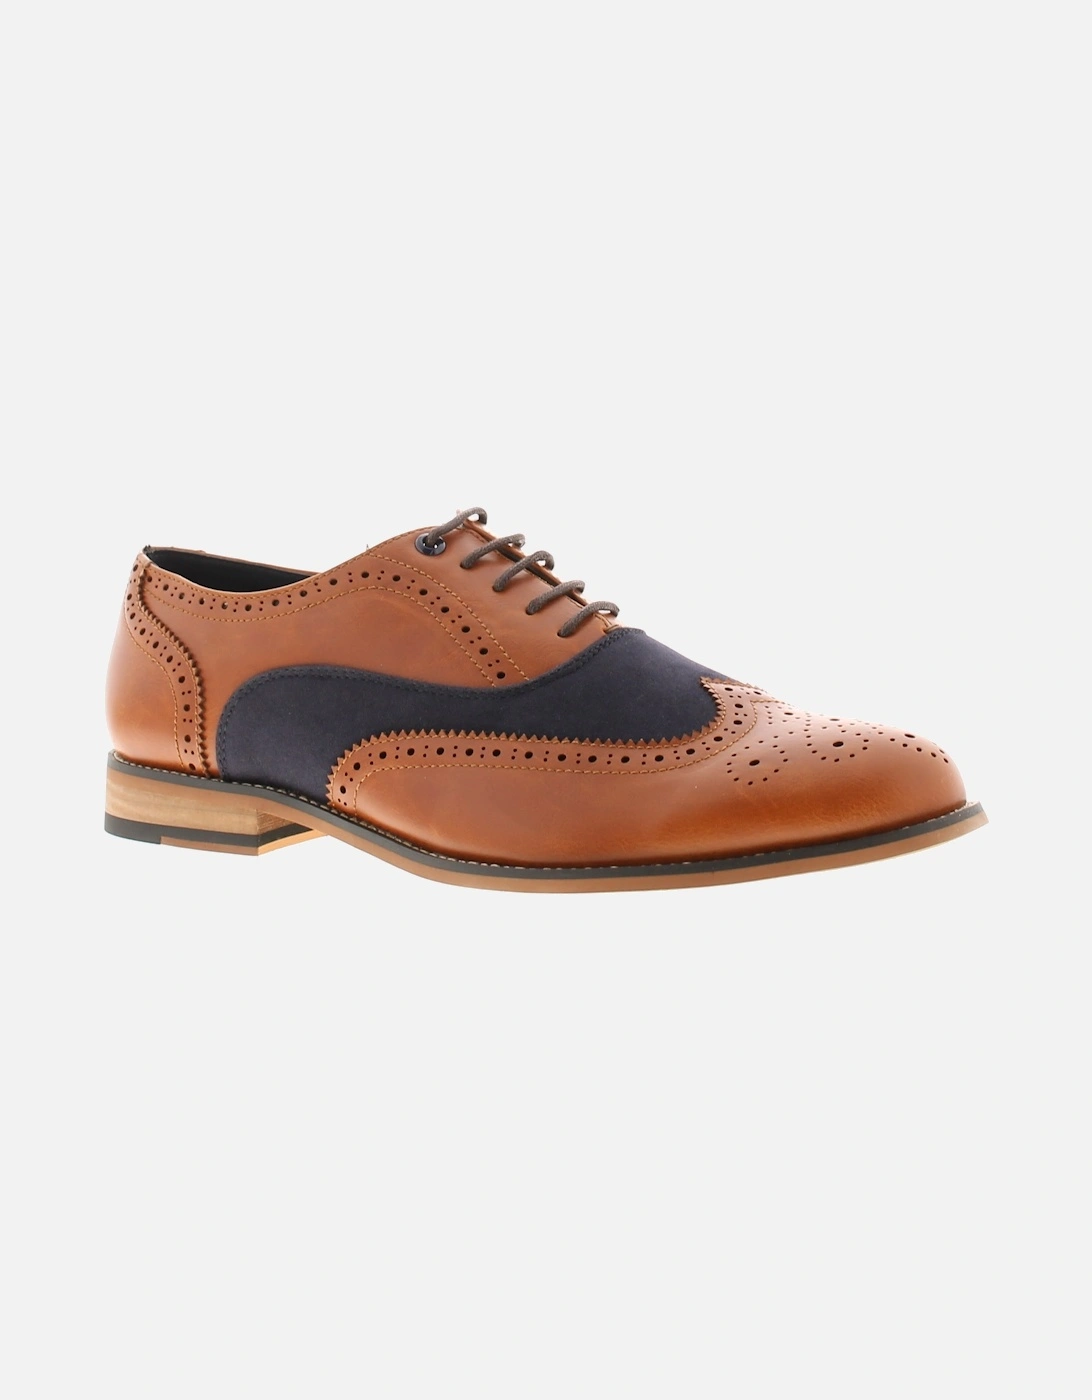 Mens Brogue Shoes Brunswick Oxford Patterned Toe Upper Tan UK Size, 6 of 5